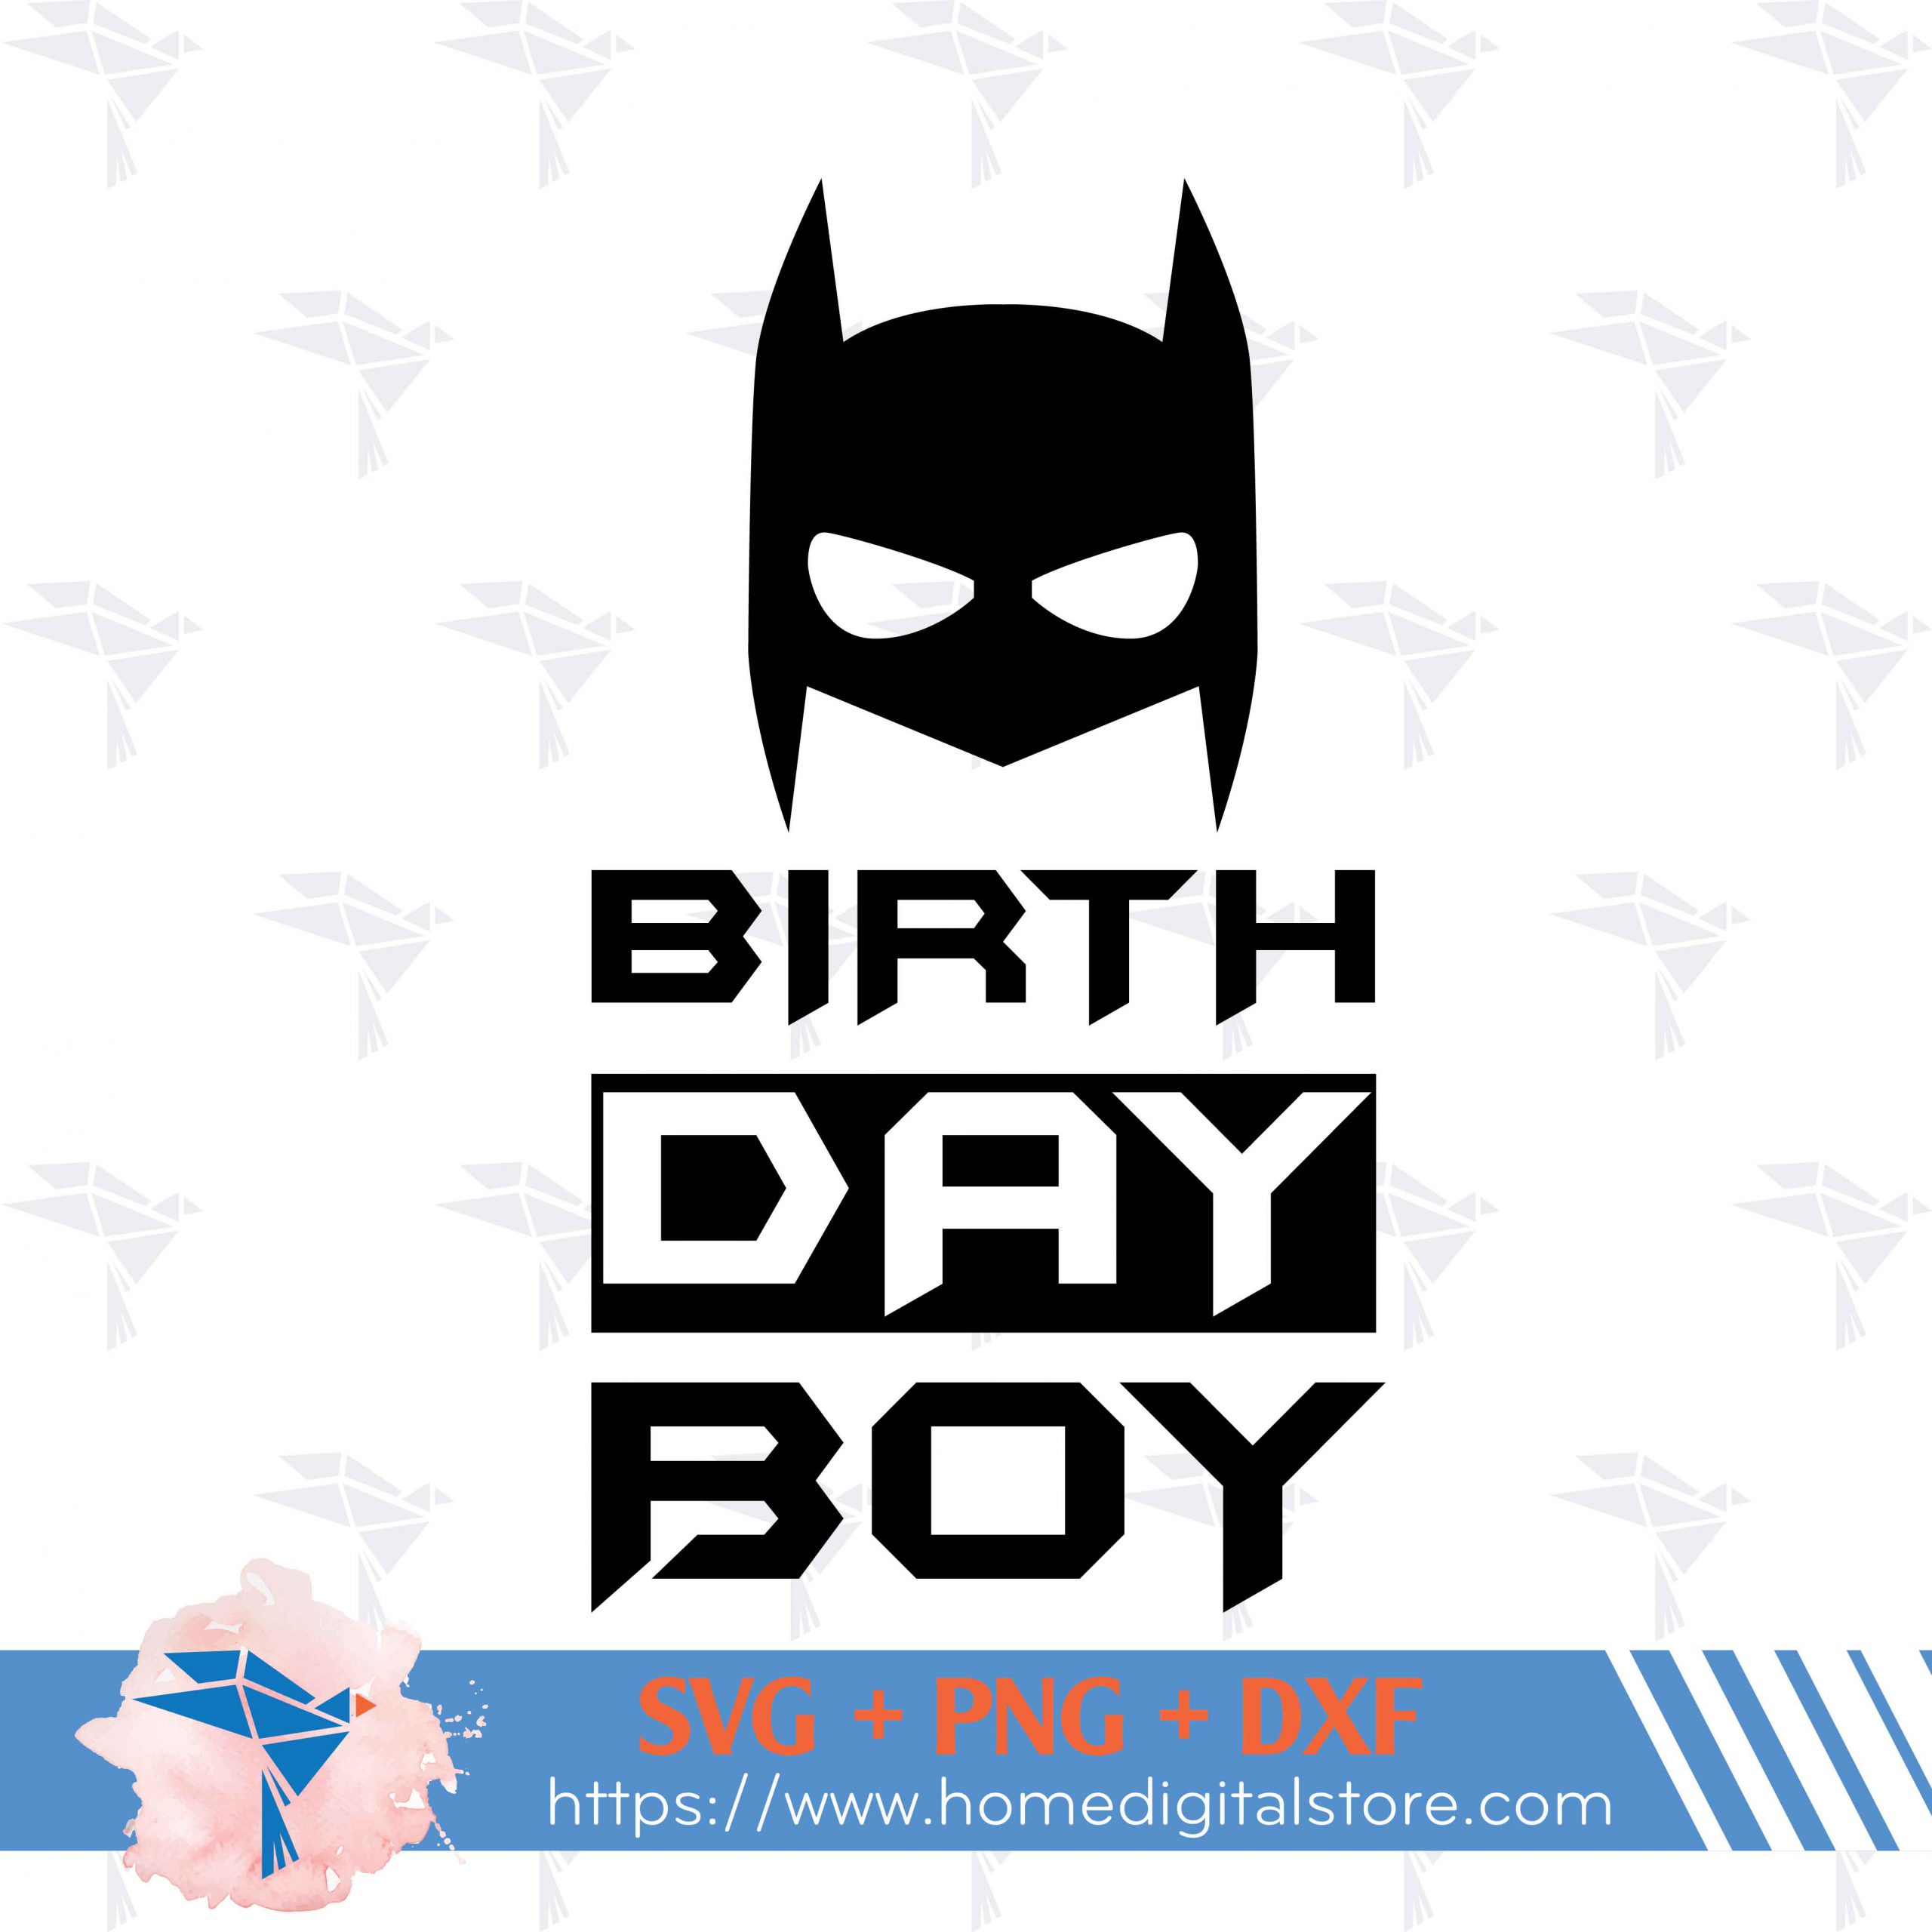 Birthday Boy Batman SVG, PNG, DXF for Cutting, Printing, Design